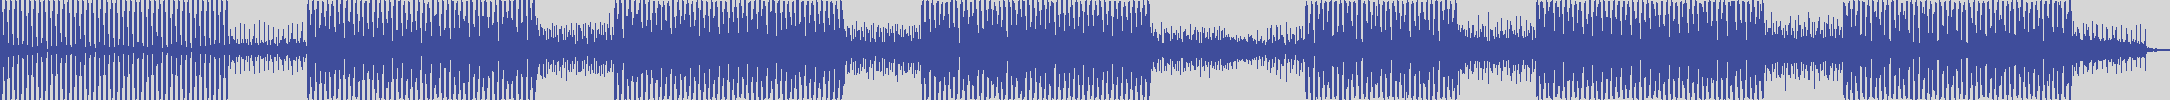 atomic_recordings [AR006] Neuron 99 - Hyperspace [Laser Mix] audio wave form